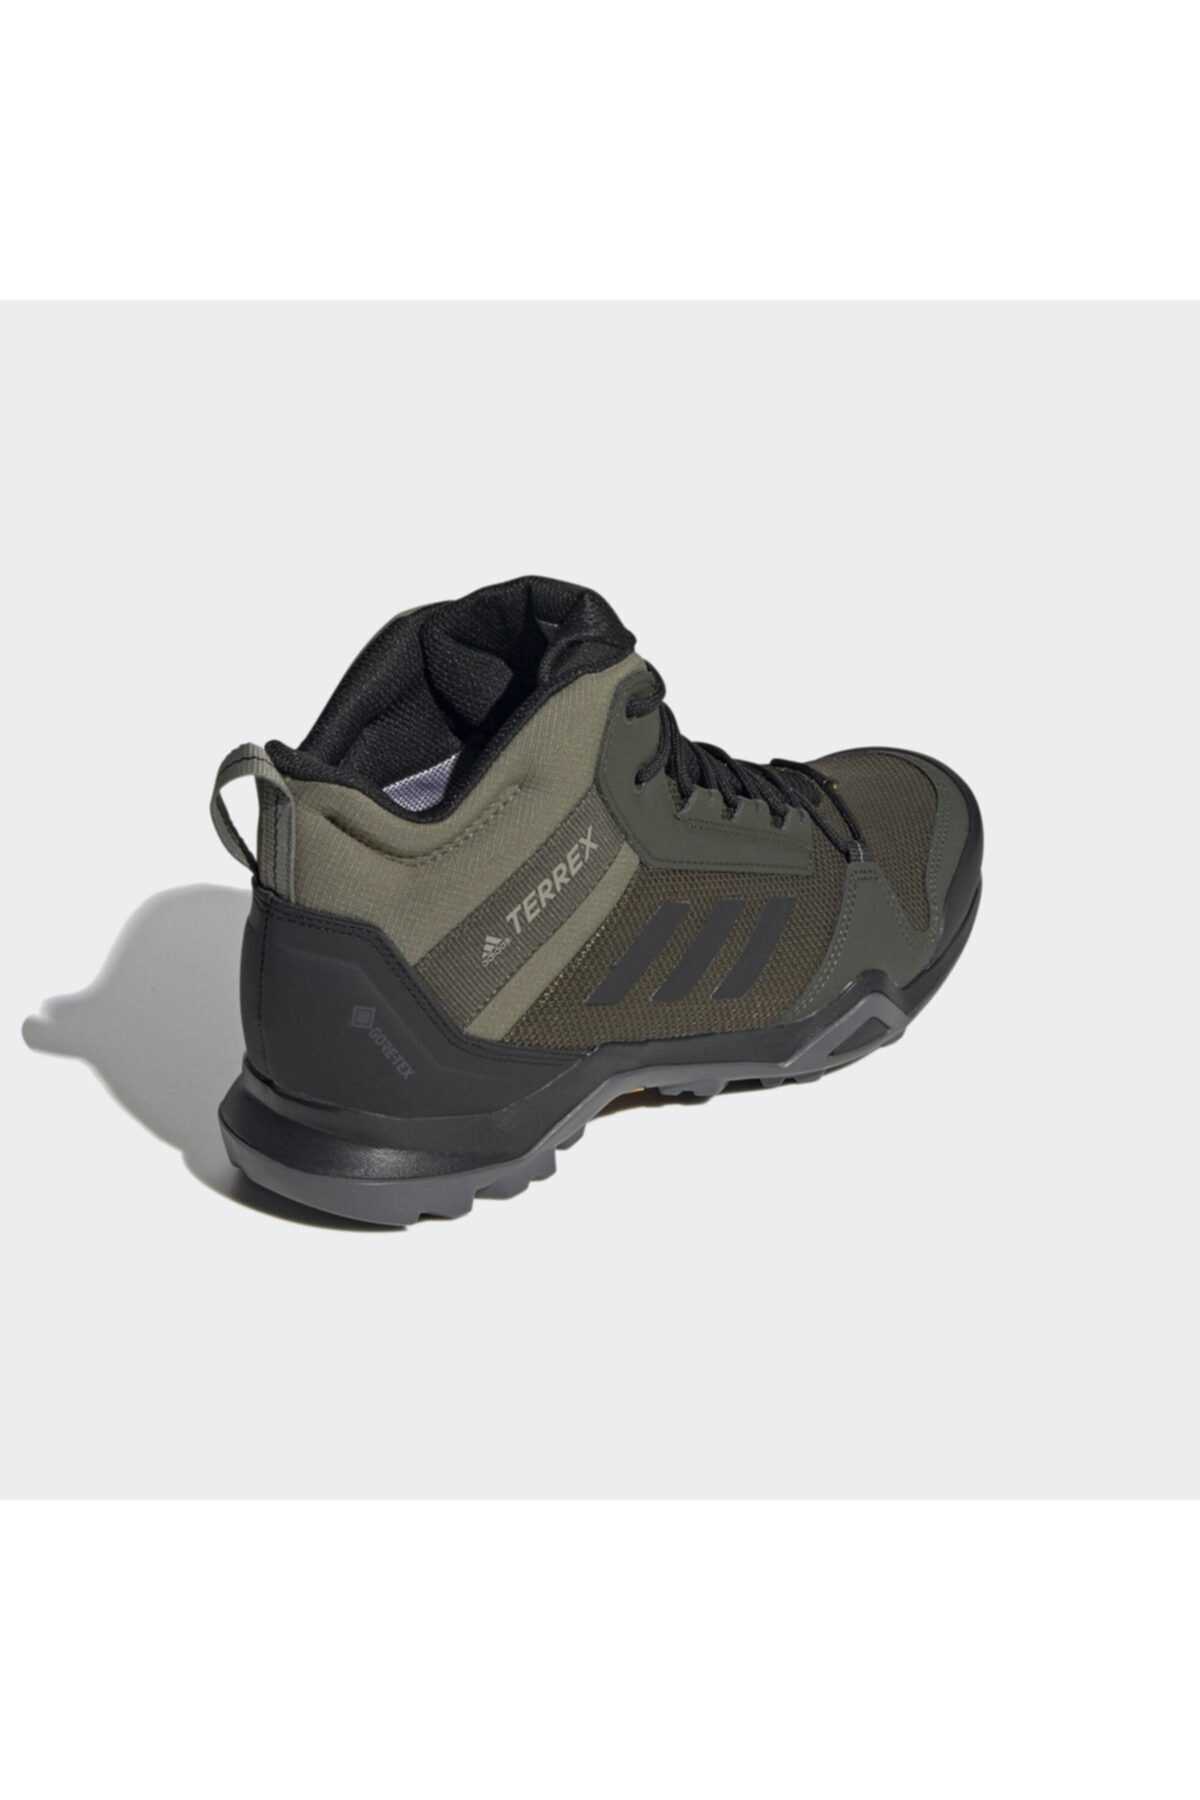 سفارش انلاین کفش کوهنوردی ساده شیک ادیداس رنگ خاکی کد ty46814685